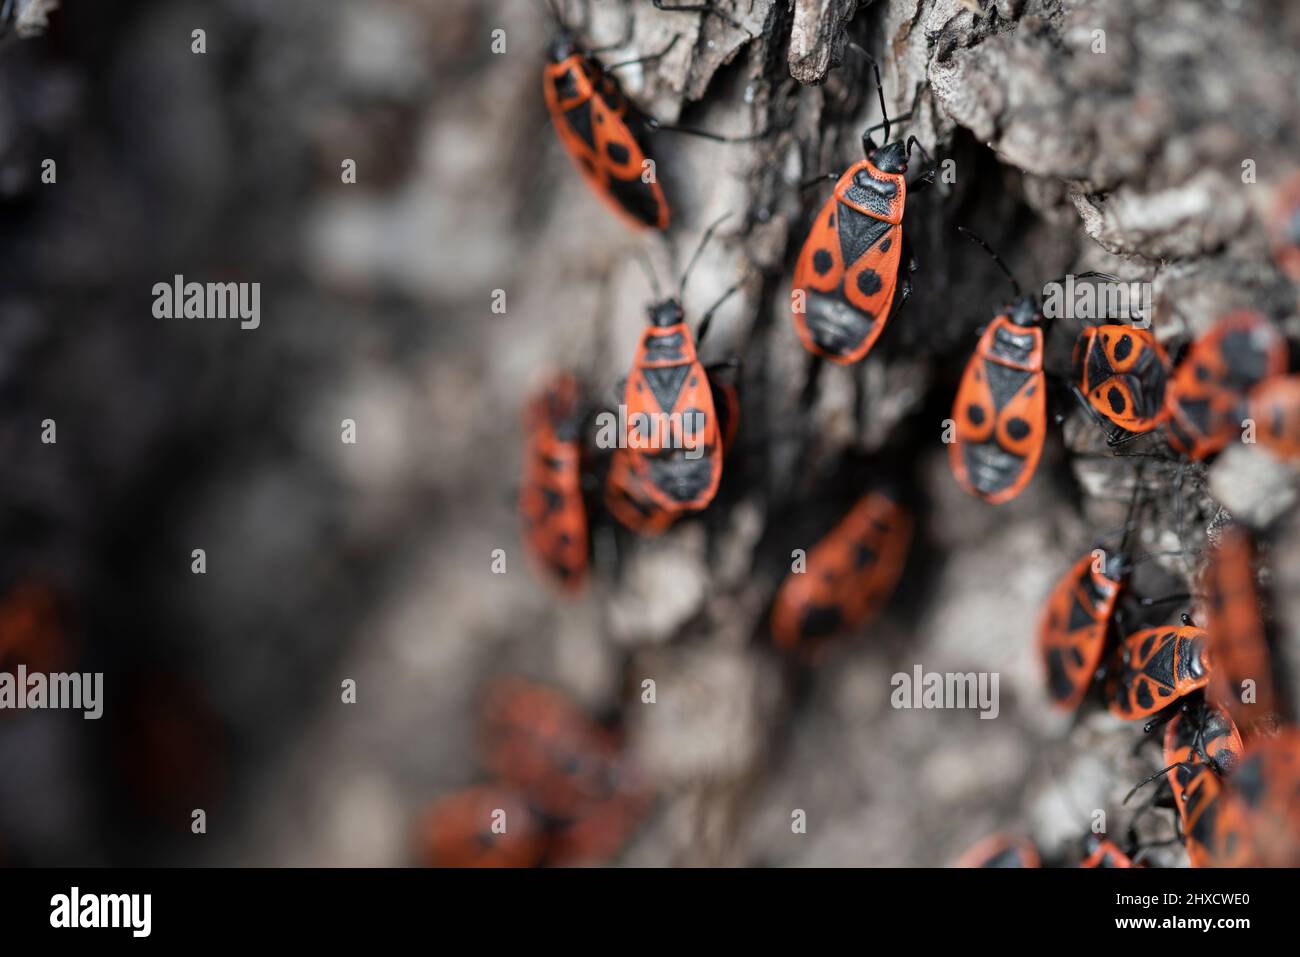 Fire bugs (Pyrrhocoris apterus), commonly called fire beetles, crawl along a tree trunk Stock Photo